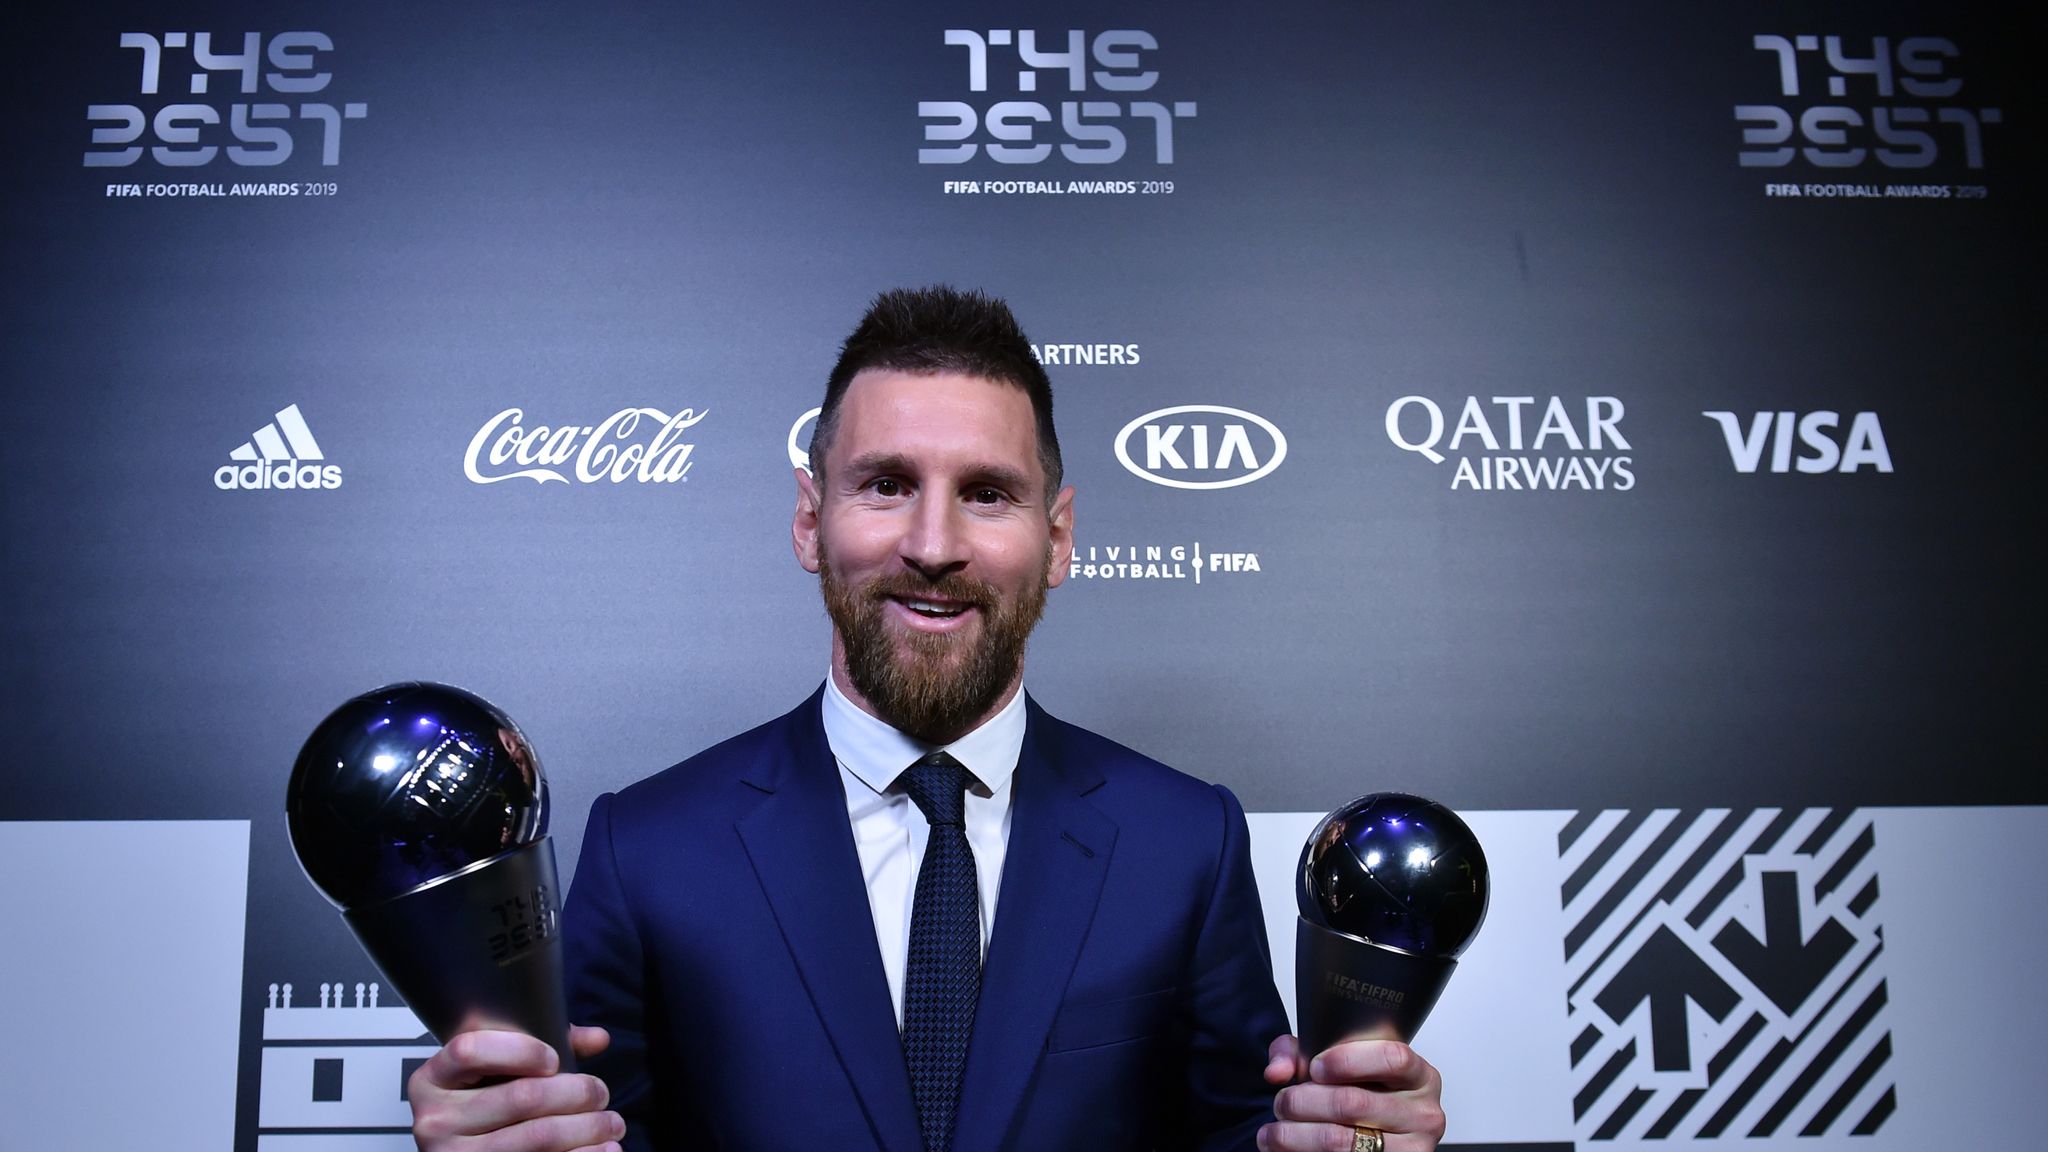 ÎÏÎ¿ÏÎ­Î»ÎµÏÎ¼Î± ÎµÎ¹ÎºÏÎ½Î±Ï Î³Î¹Î± Lionel Messi,named FIFA